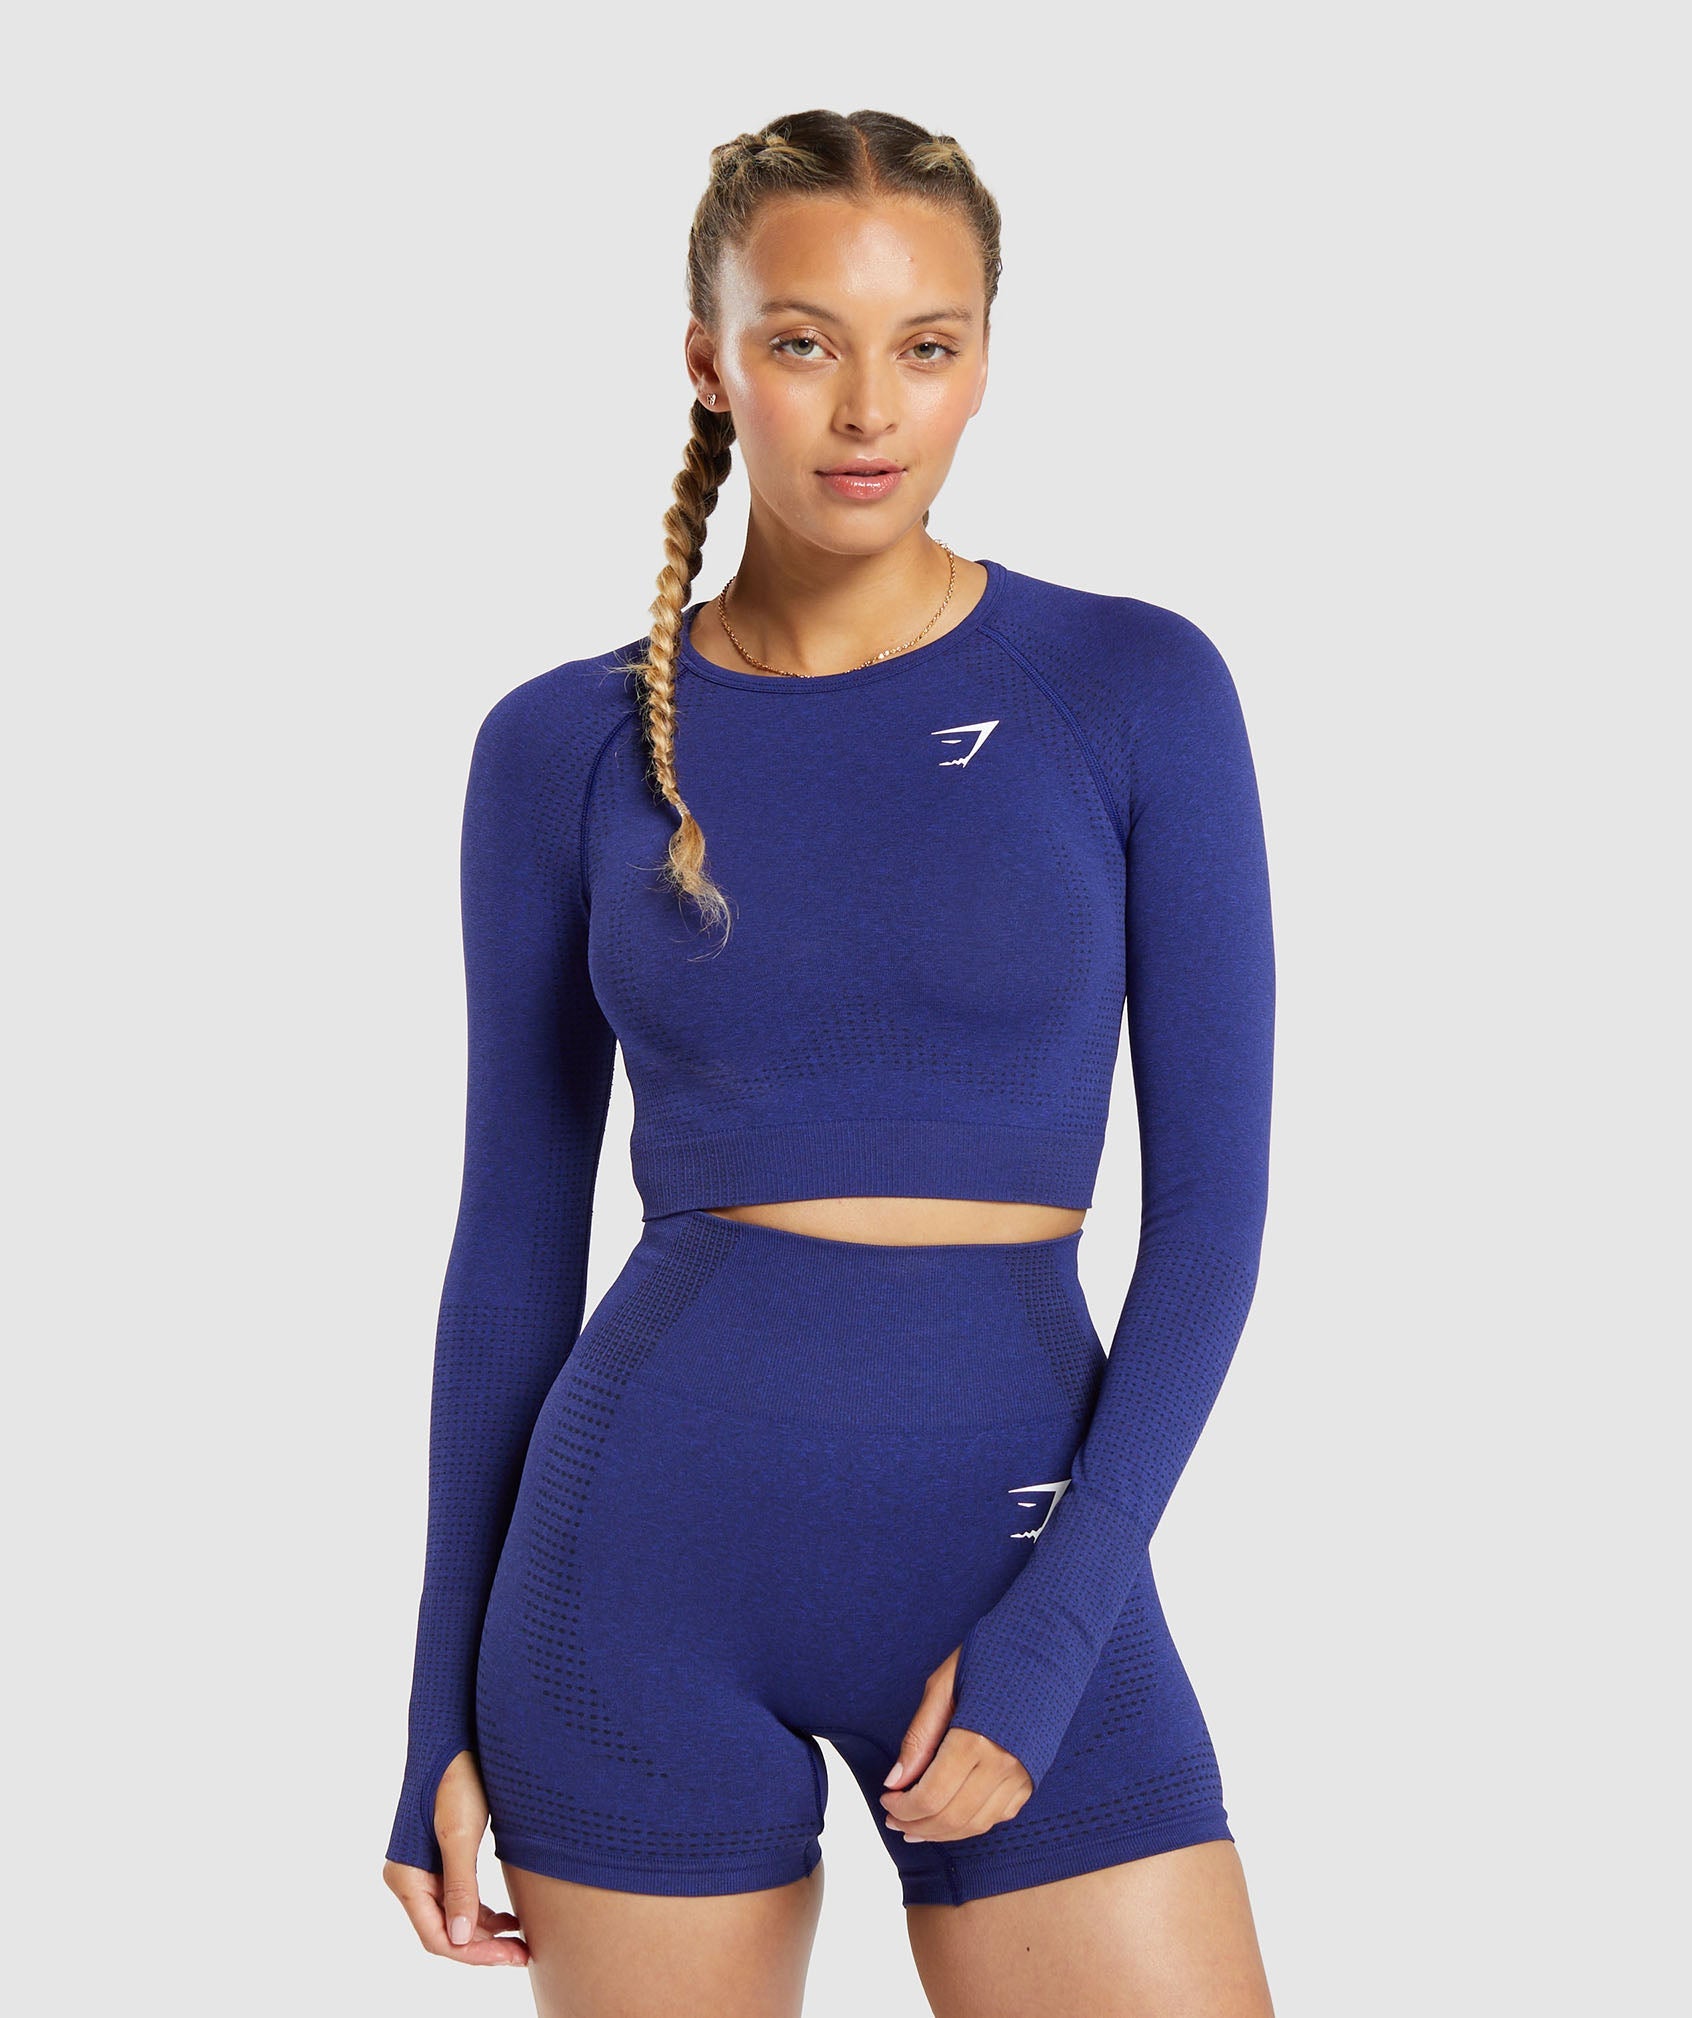 LNDR womens activewear crop top XS navy blue maroon bnwt